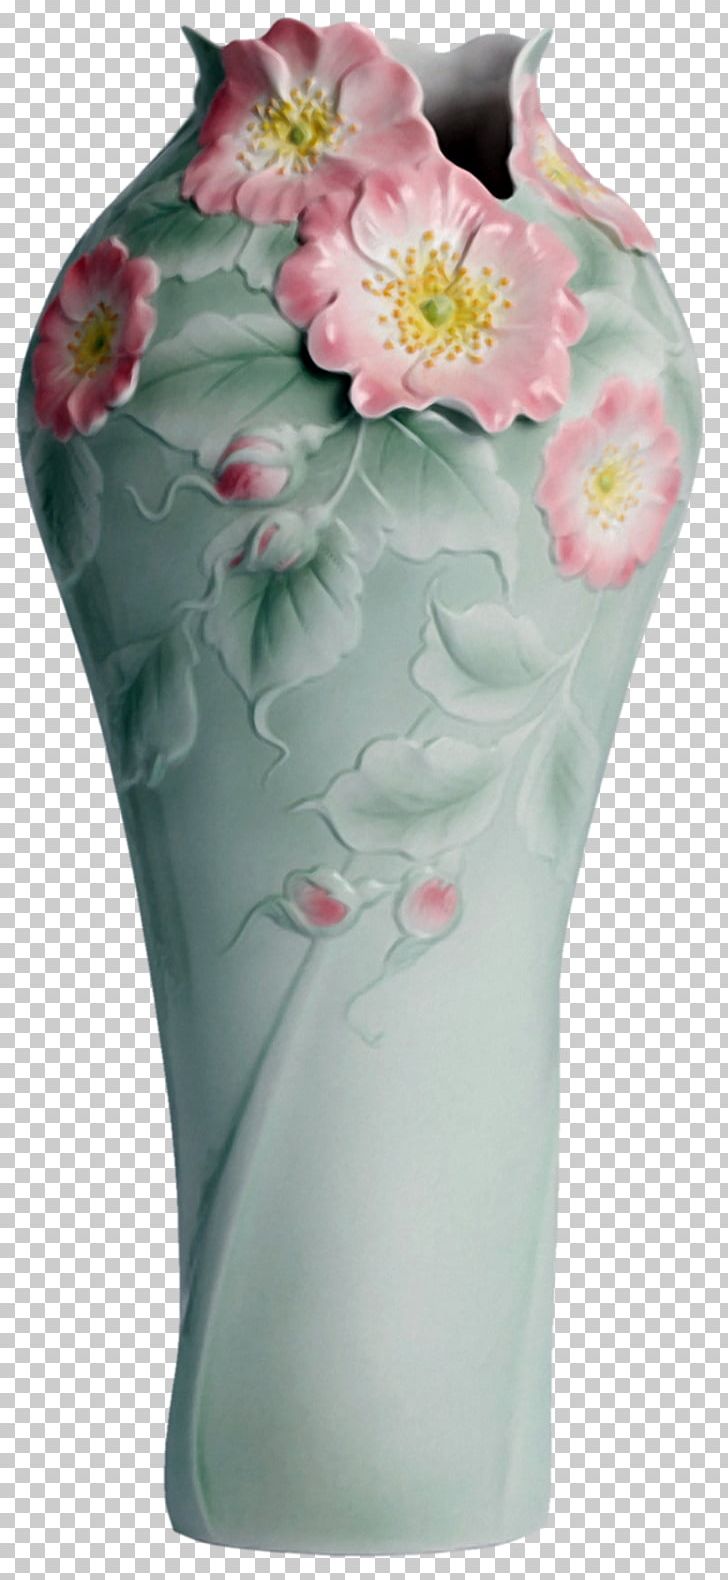 Tulip Vase Decorative Arts Pottery Ceramic PNG, Clipart, Artifact, Carve, Ceramic, Ceramic Glaze, Decorative Arts Free PNG Download